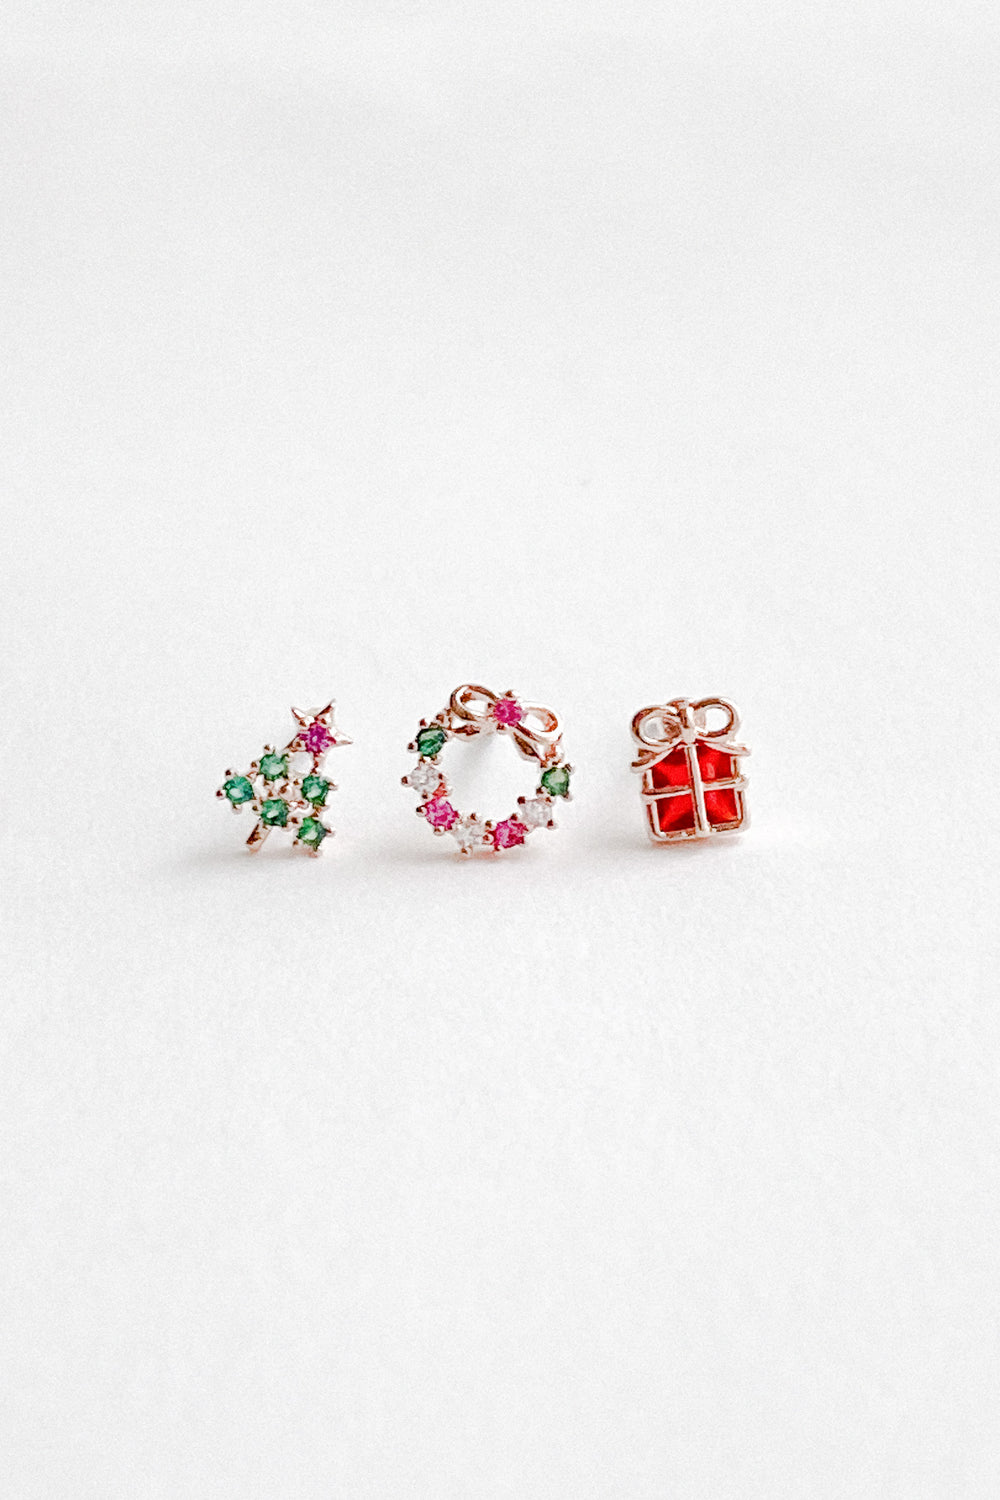 [XMAS] 22601 No. 6 Wonderful Christmas Earrings Set